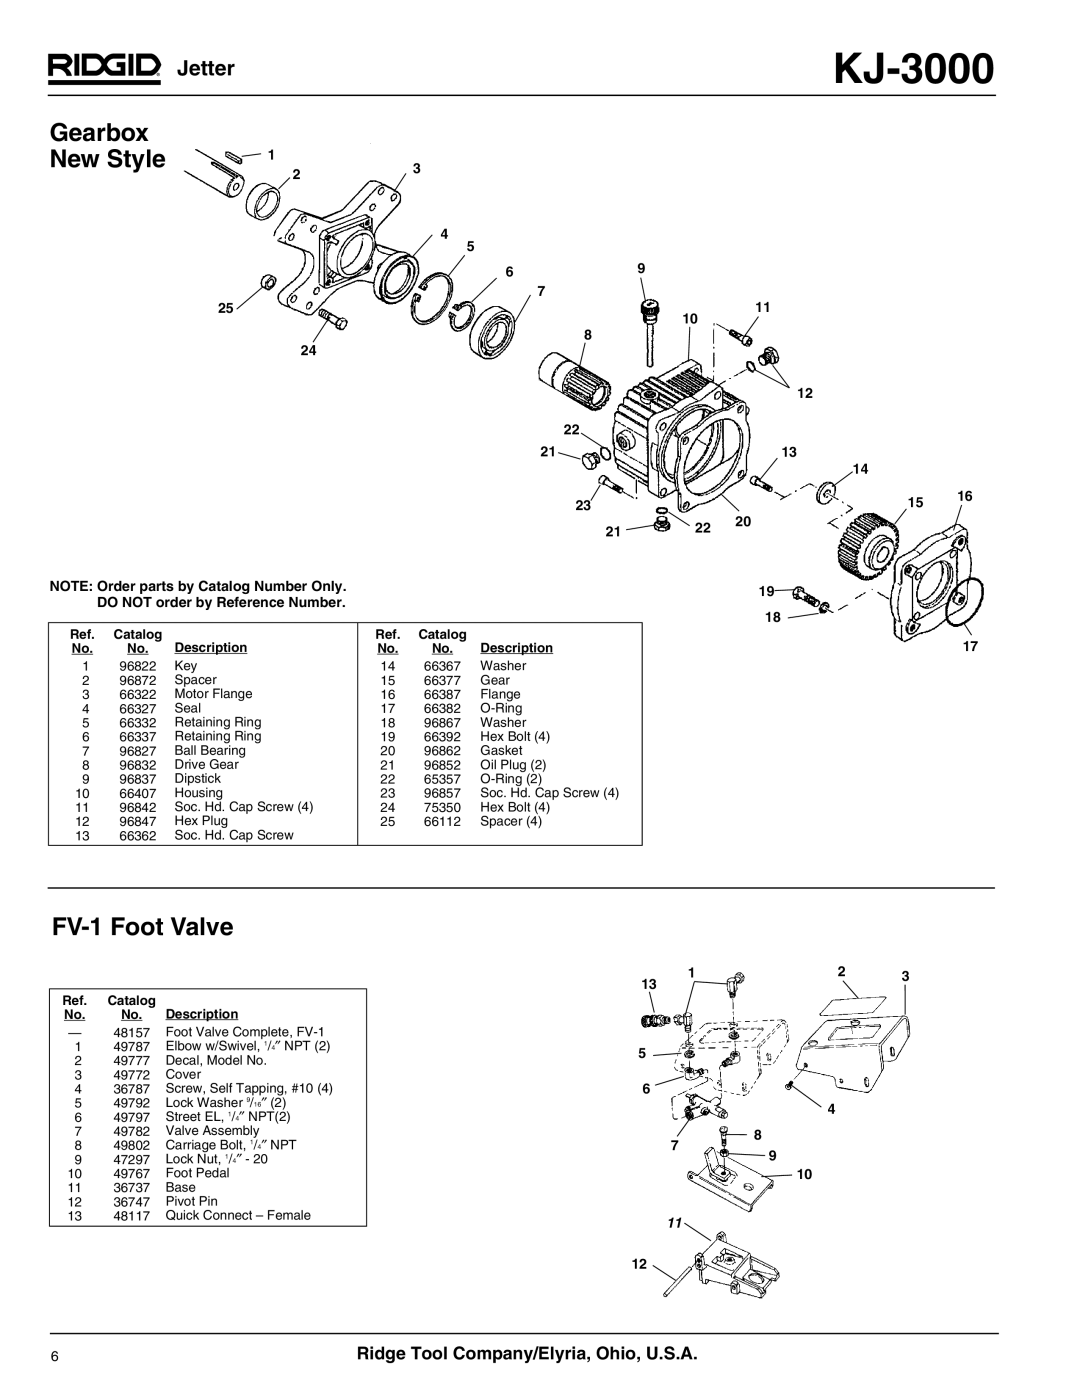 RIDGID KJ-3000 manual Gearbox New Style, FV-1Foot Valve, Jetter, Ridge Tool Company/Elyria, Ohio, U.S.A 